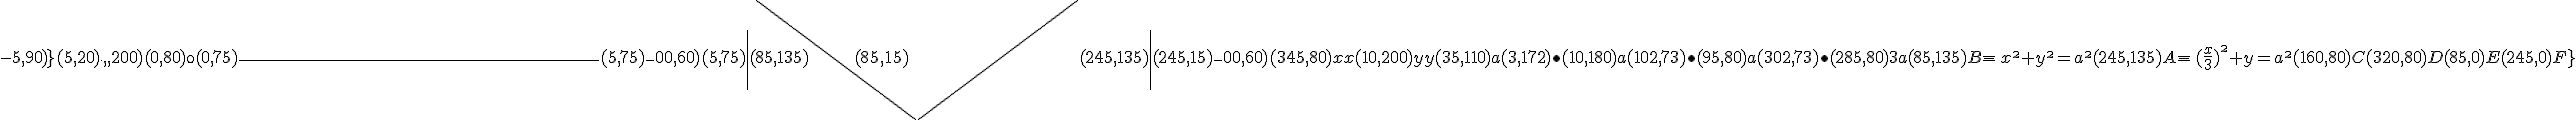 \unitlength{1}\picture(385,220){(5,75){\circle(200,200;-20,90)}(5,75){\circle(600,200;-5,90)}(5,20){\line(0,200)}(0,80){\0}(0,75){\line(360)}(5,75){\line(80,60)}(5,75){\line(80,-60)}(85,135){\line(160,-120)}(85,15){\line(160,120)}(245,135){\line(80,-60)}(245,15){\line(80,60)}(345,80){+2$x}(10,200){+2$y}(35,110)a(3,172){\bullet}(10,180)a(102,73){\bullet}(95,80)a(302,73){\bullet}(285,80){3a}(85,135){B{\compose{-}{=}}\,x^\2+y^\2=a^\2}(245,135){A{\compose{-}{=}\,(\frac{x}{3})^\2+y^\2=a^\2}}(160,80)C(320,80)D(85,0)E(245,0)F}